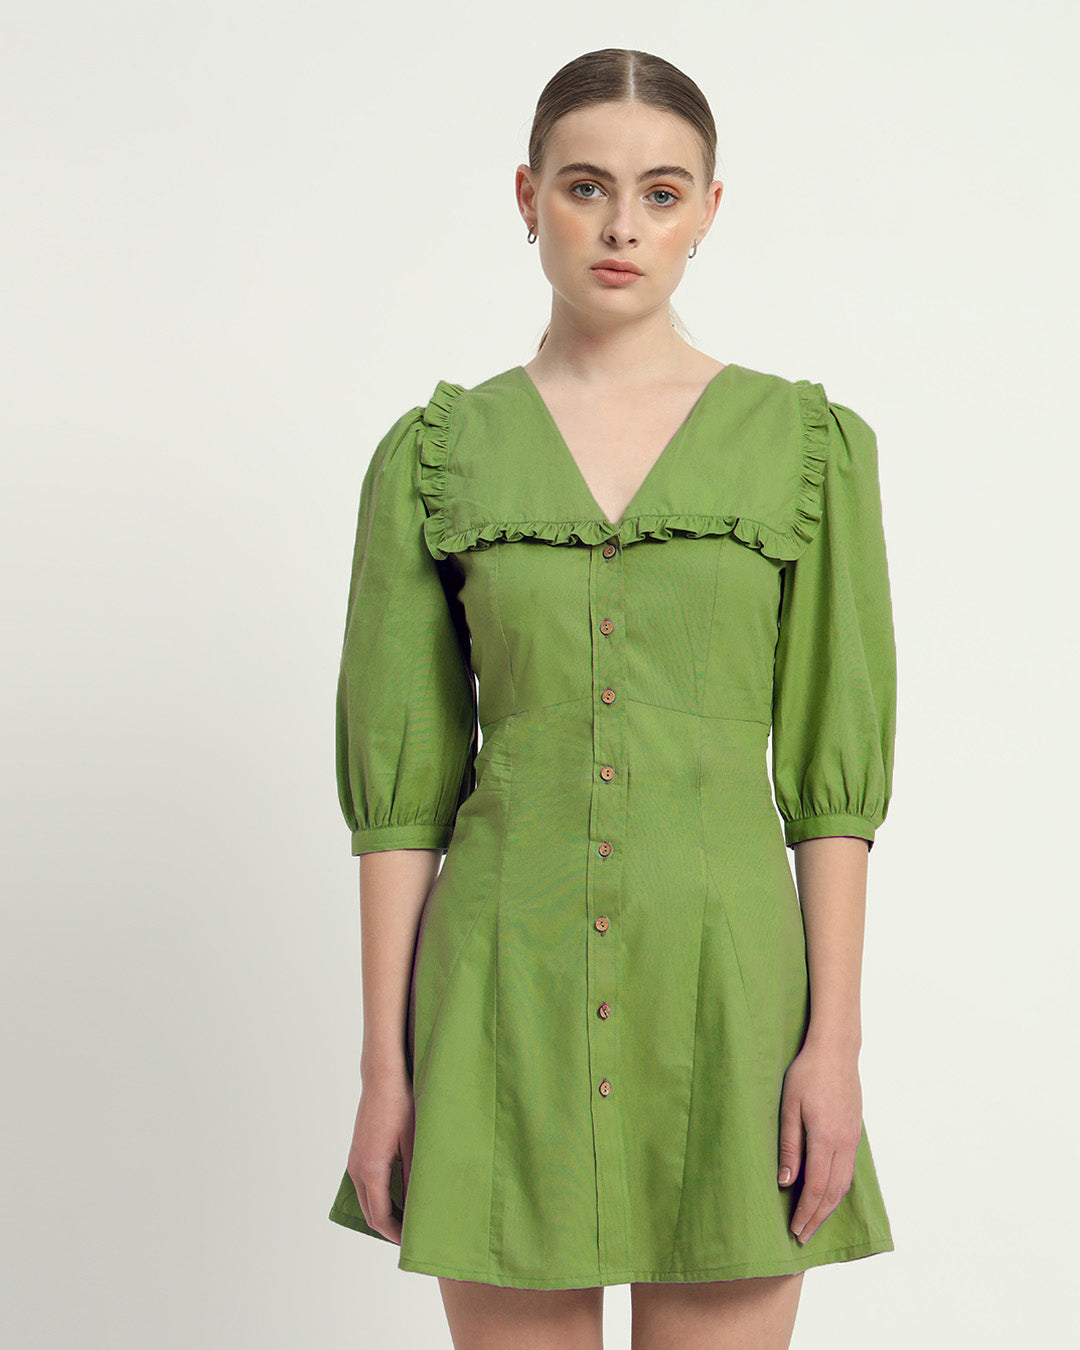 The Isabela Fern Cotton Dress